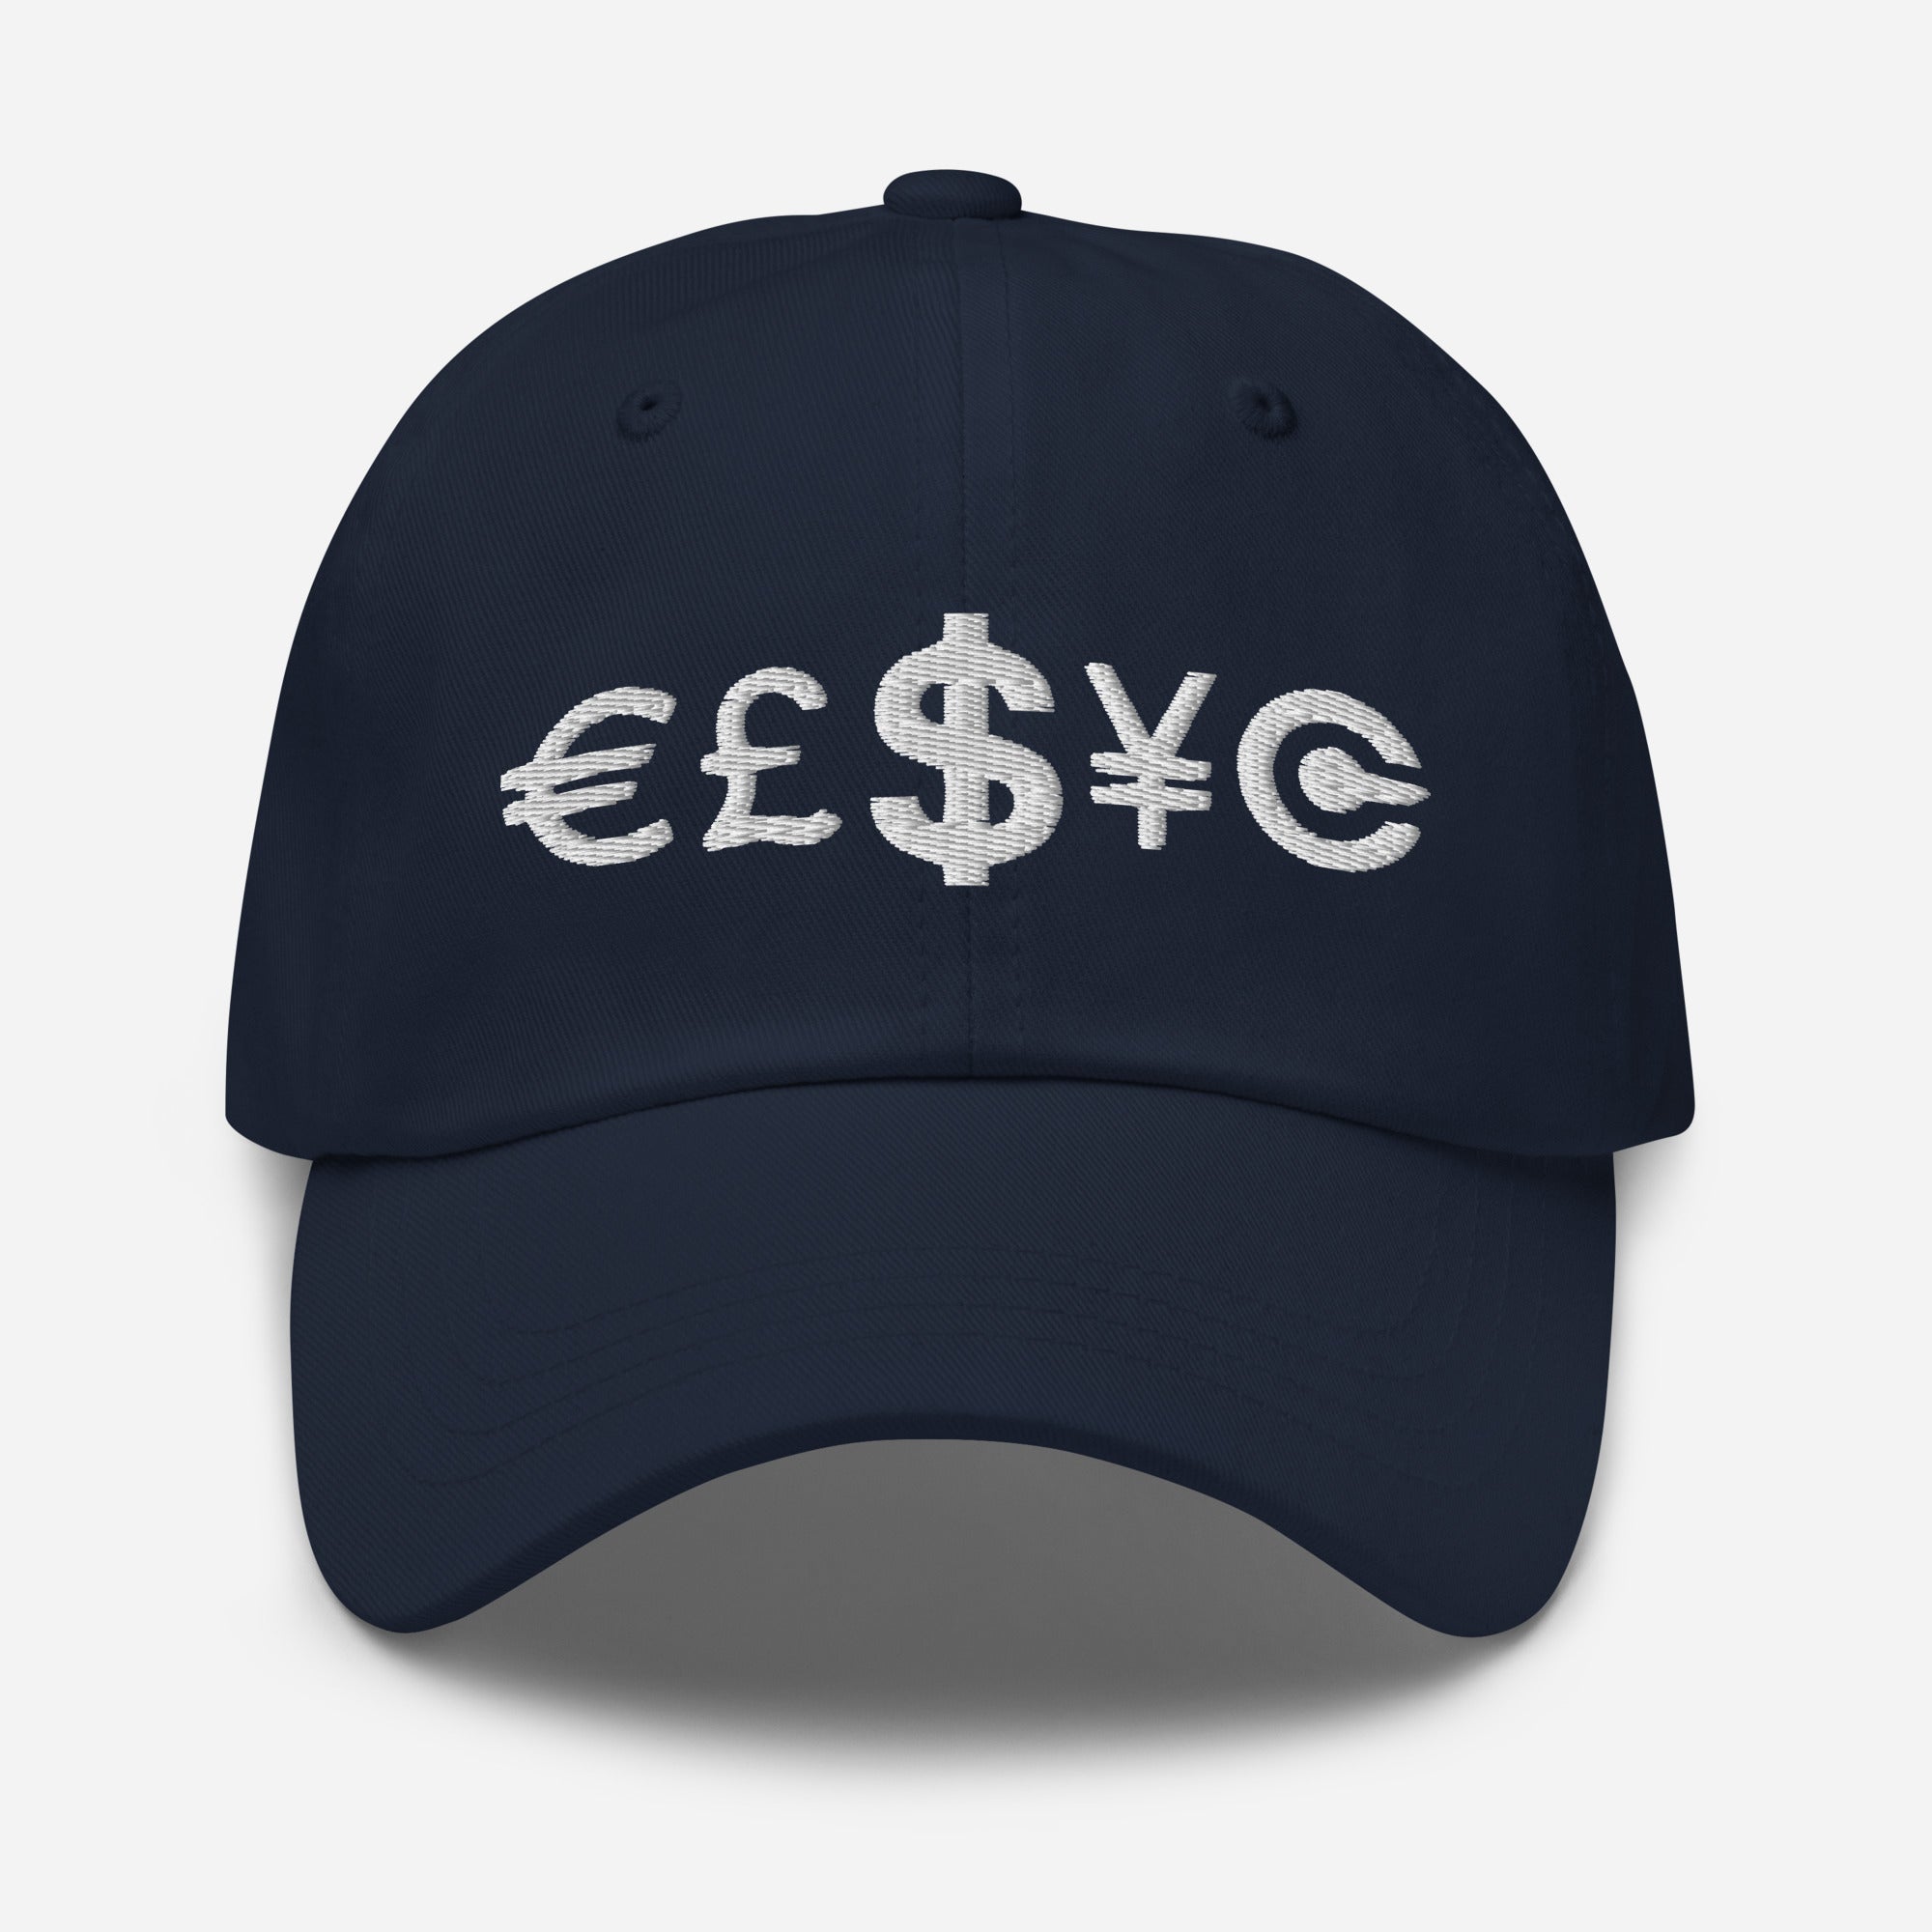 Money is Power Dollar Euro Pound Yen Crypto Embroidered Baseball Cap Dad hat